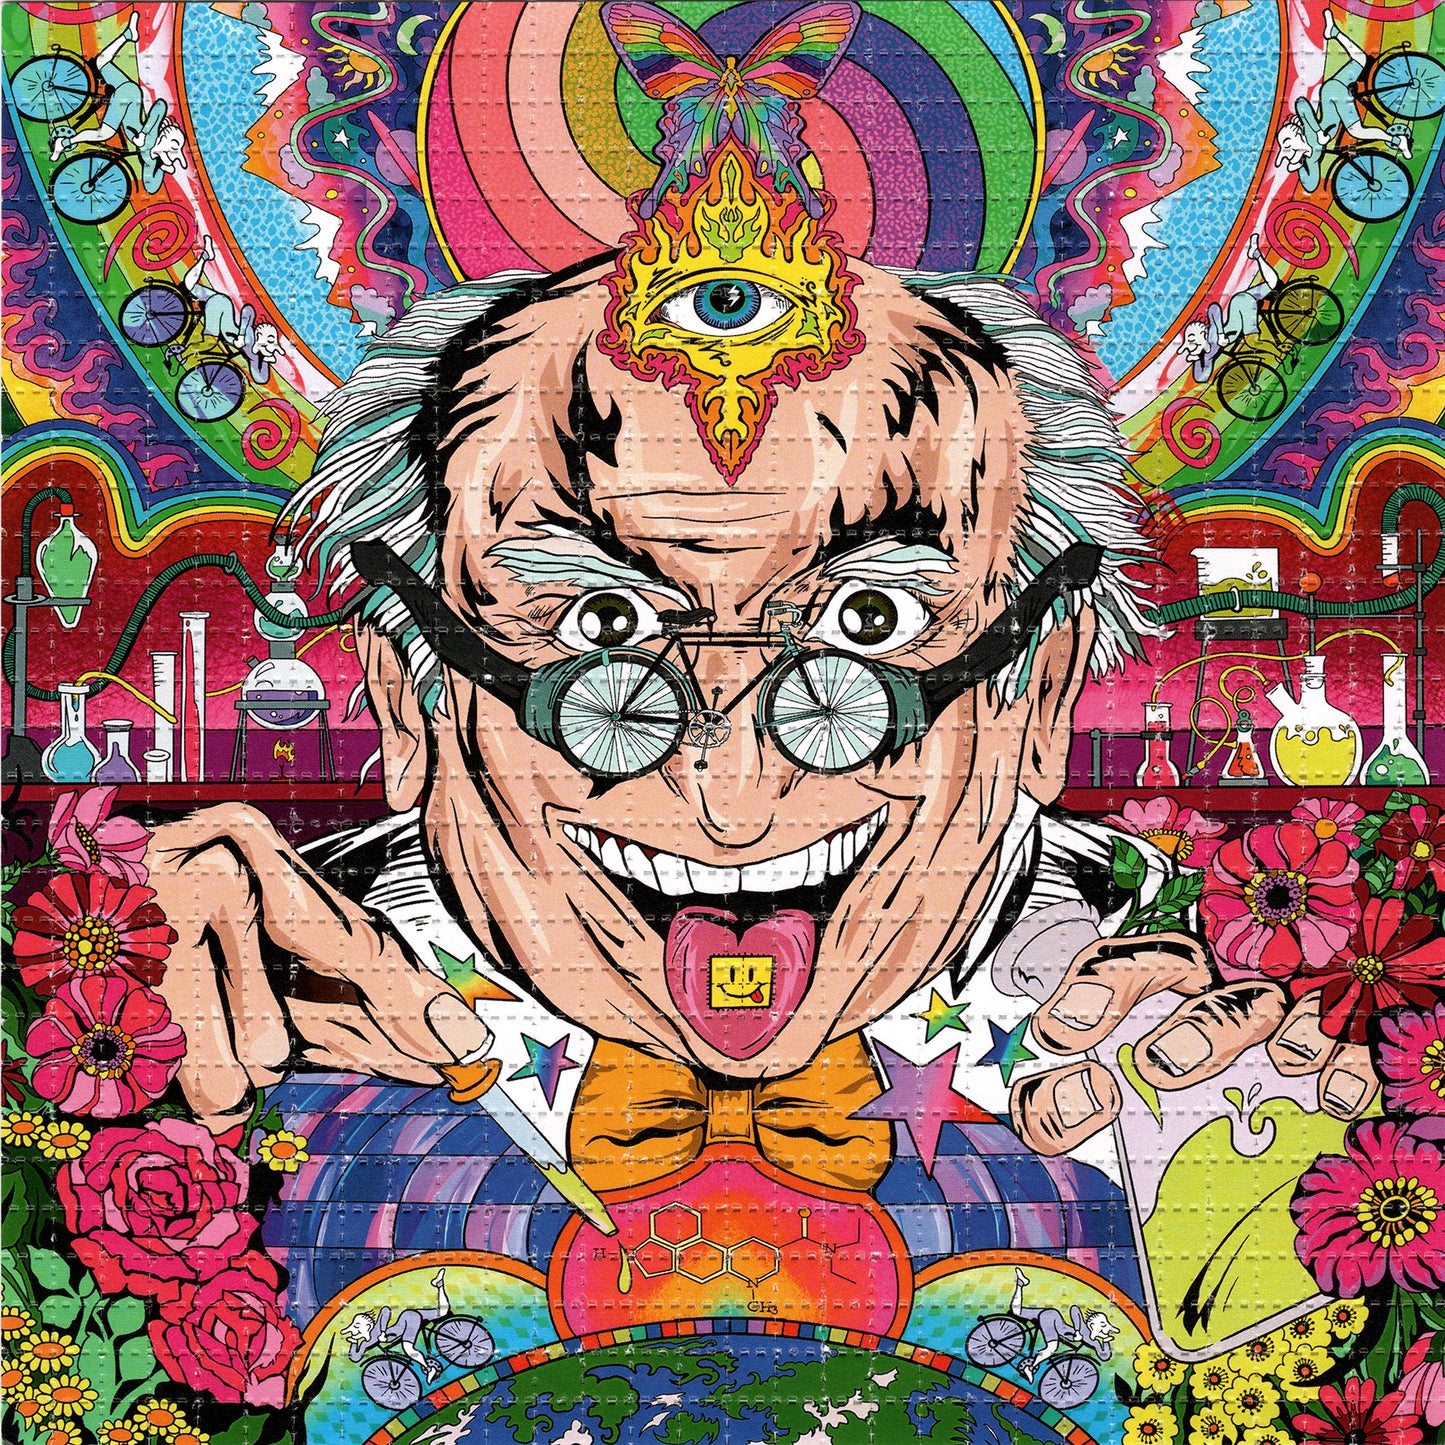 Bike Day by Ellie Paisley Brooks Signed Limited Edition LSD blotter art print